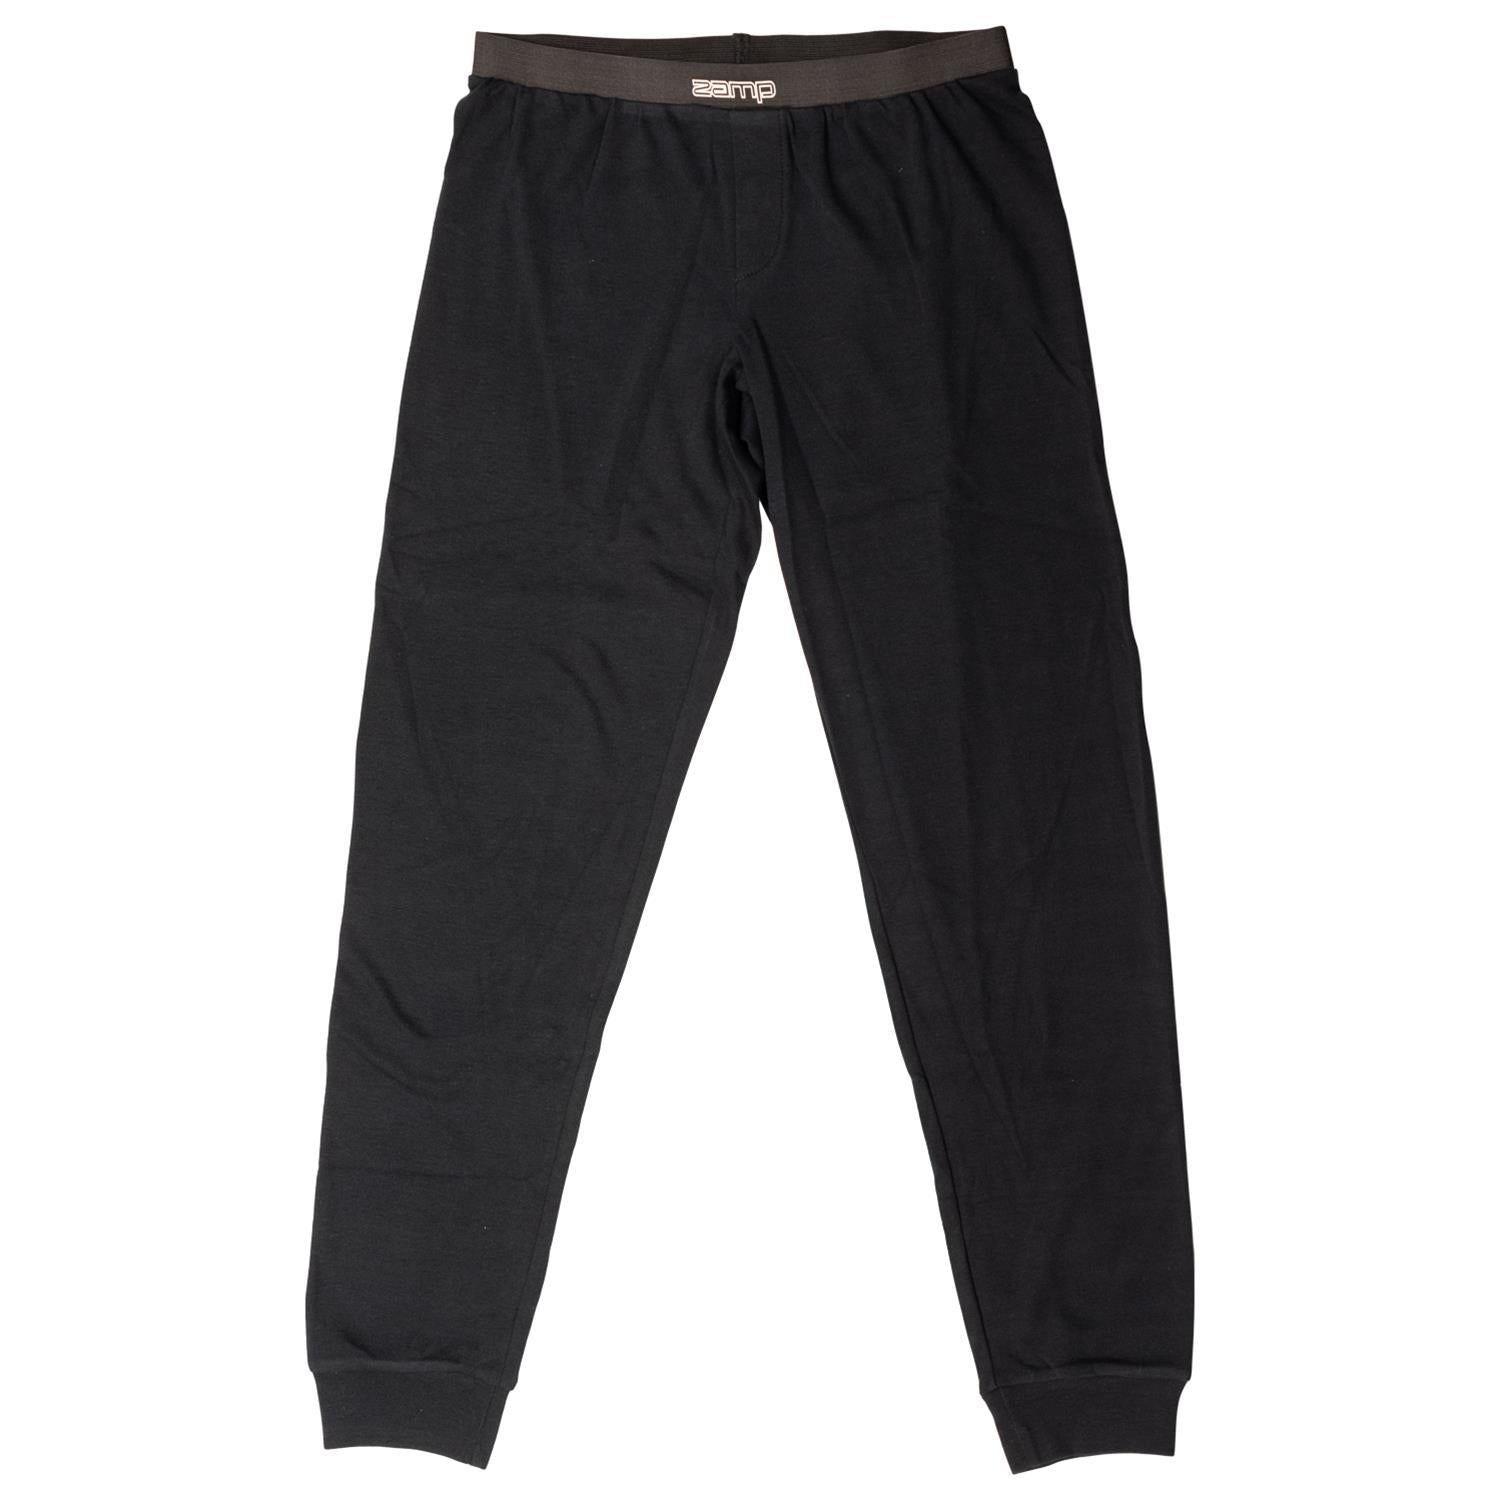 Zamp Solar Underwear Bottom Black XXX-Large SFI 3.3 Safety Clothing Fire Retardant Underwear Bottoms main image